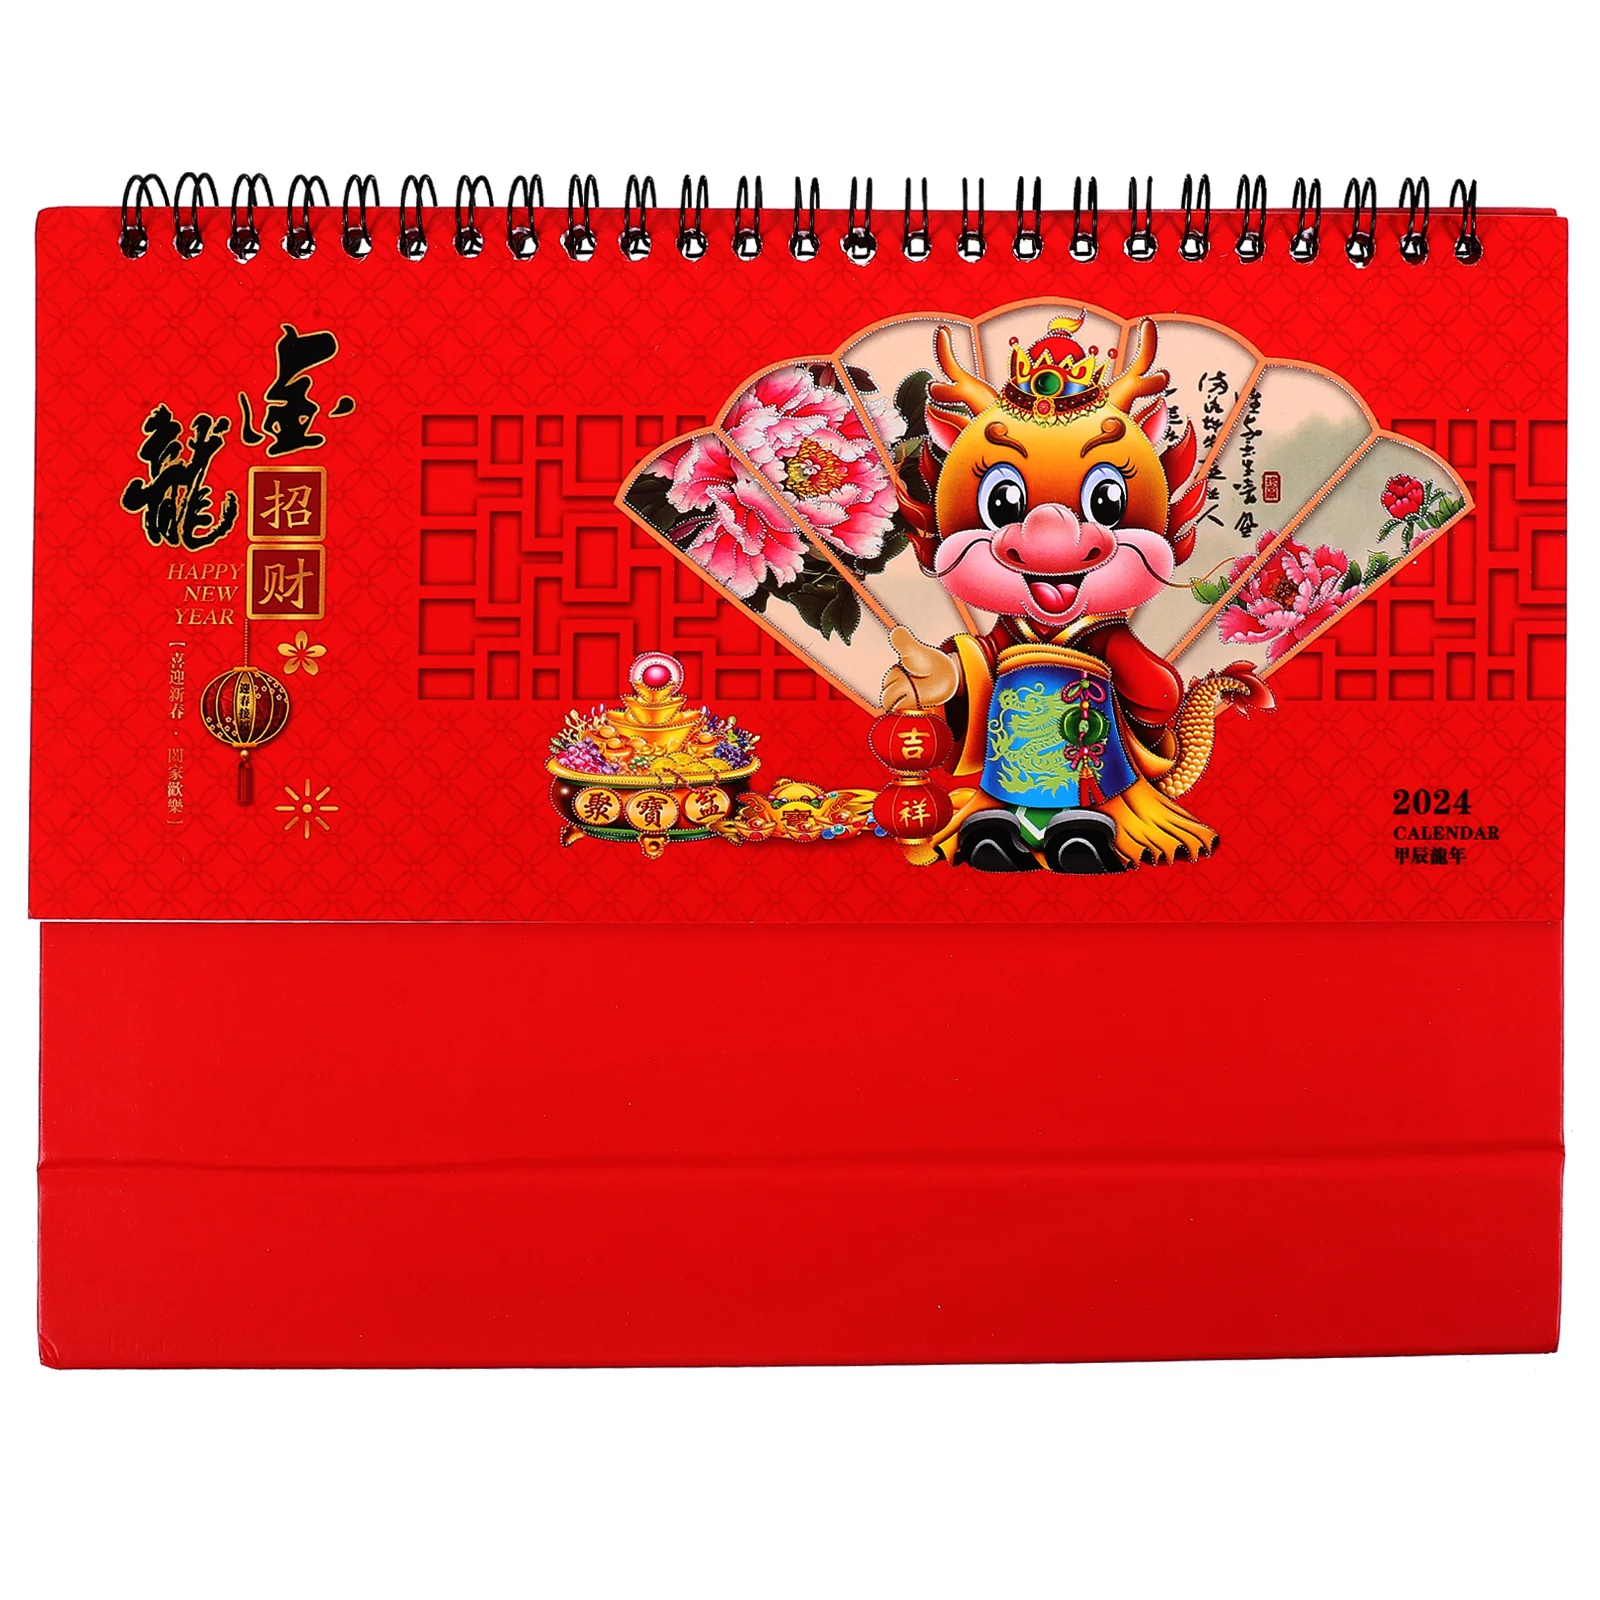 2024 Mini Desk Calendar Chinese Calendar Tabletop Flip Calendar Spiral Binding Chinese Calendar Decor Office 2024